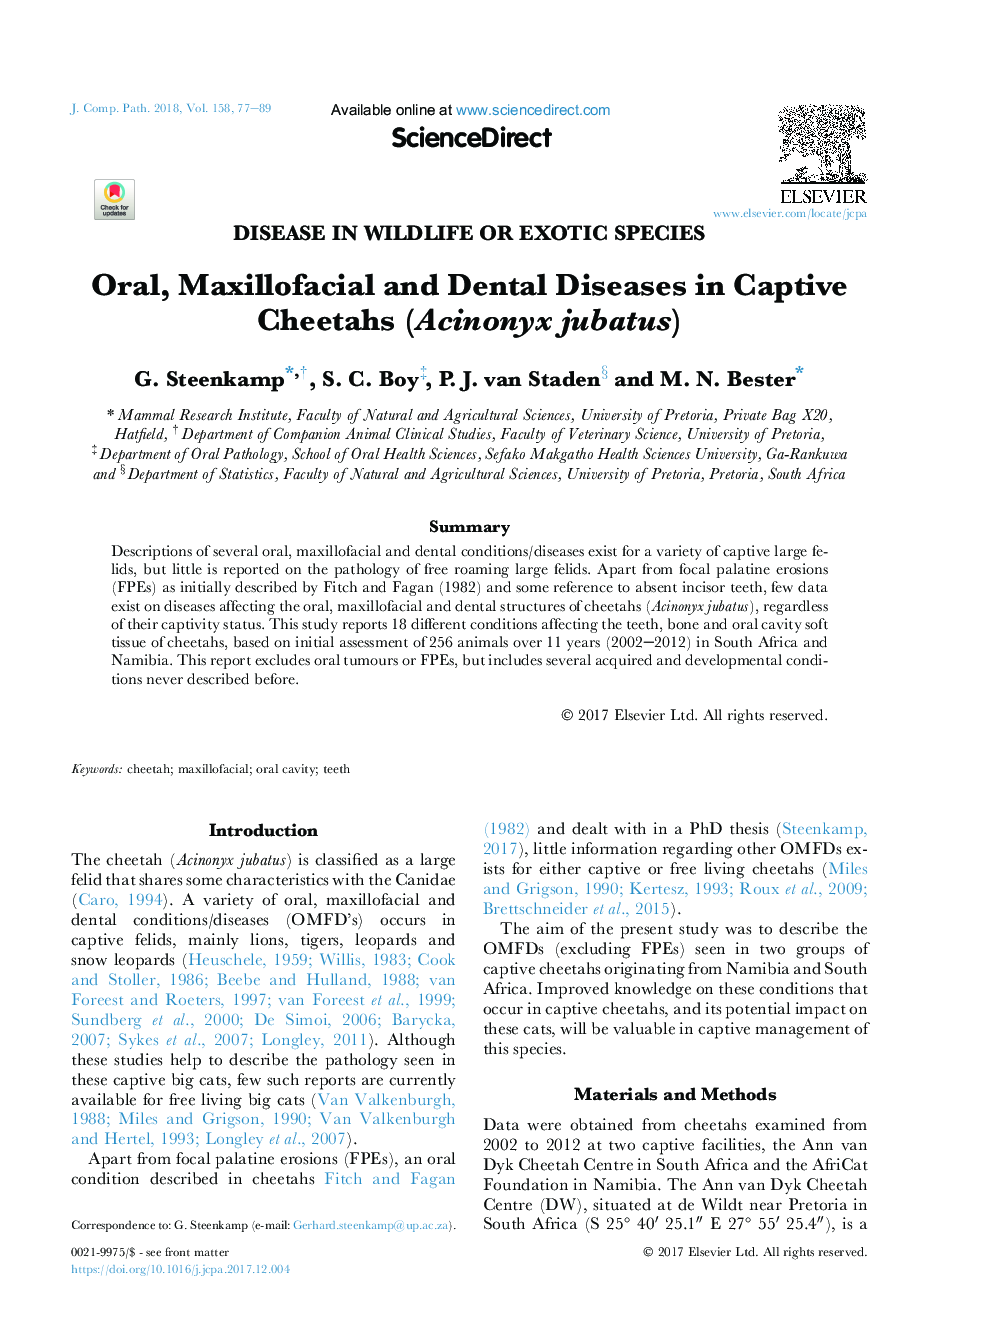 Oral, Maxillofacial and Dental Diseases in Captive Cheetahs (Acinonyx jubatus)